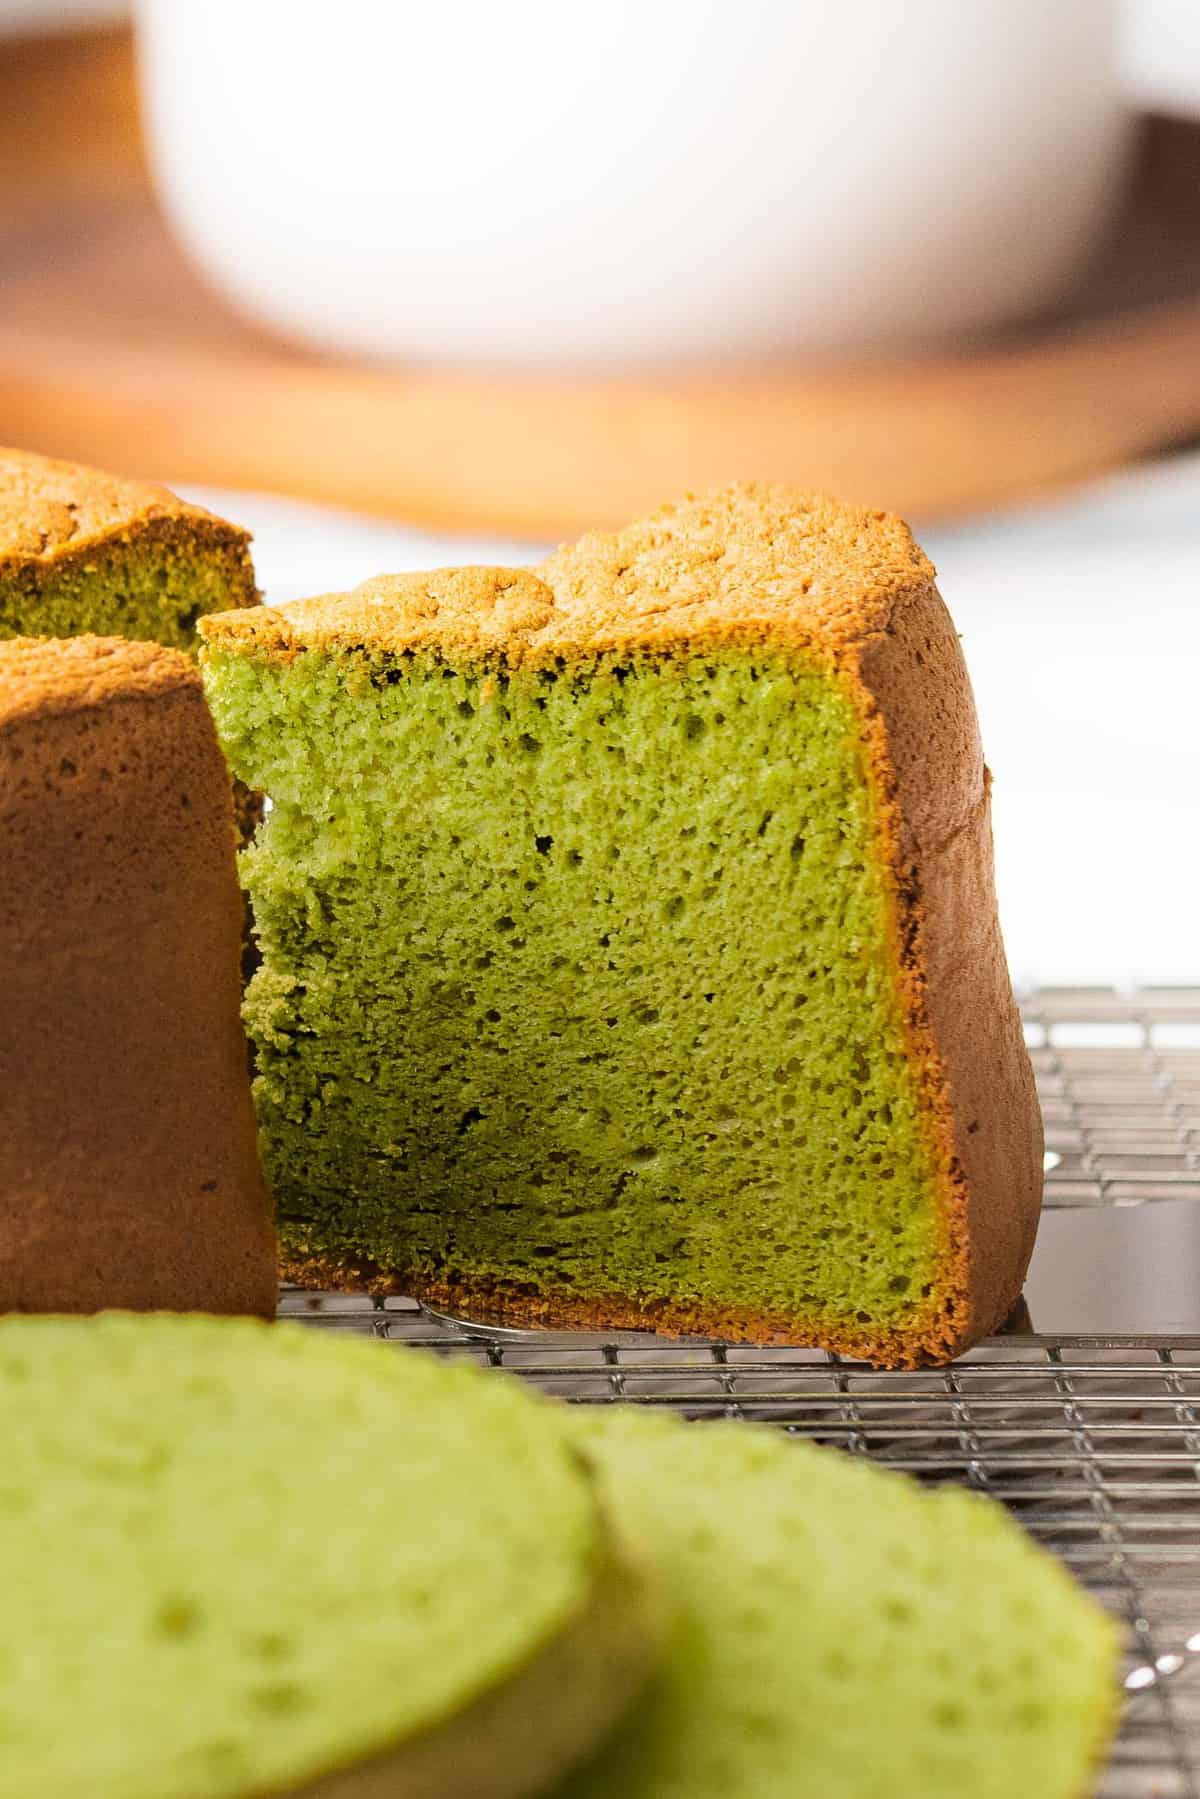 Matcha cake or green tea cake cut into a slice.